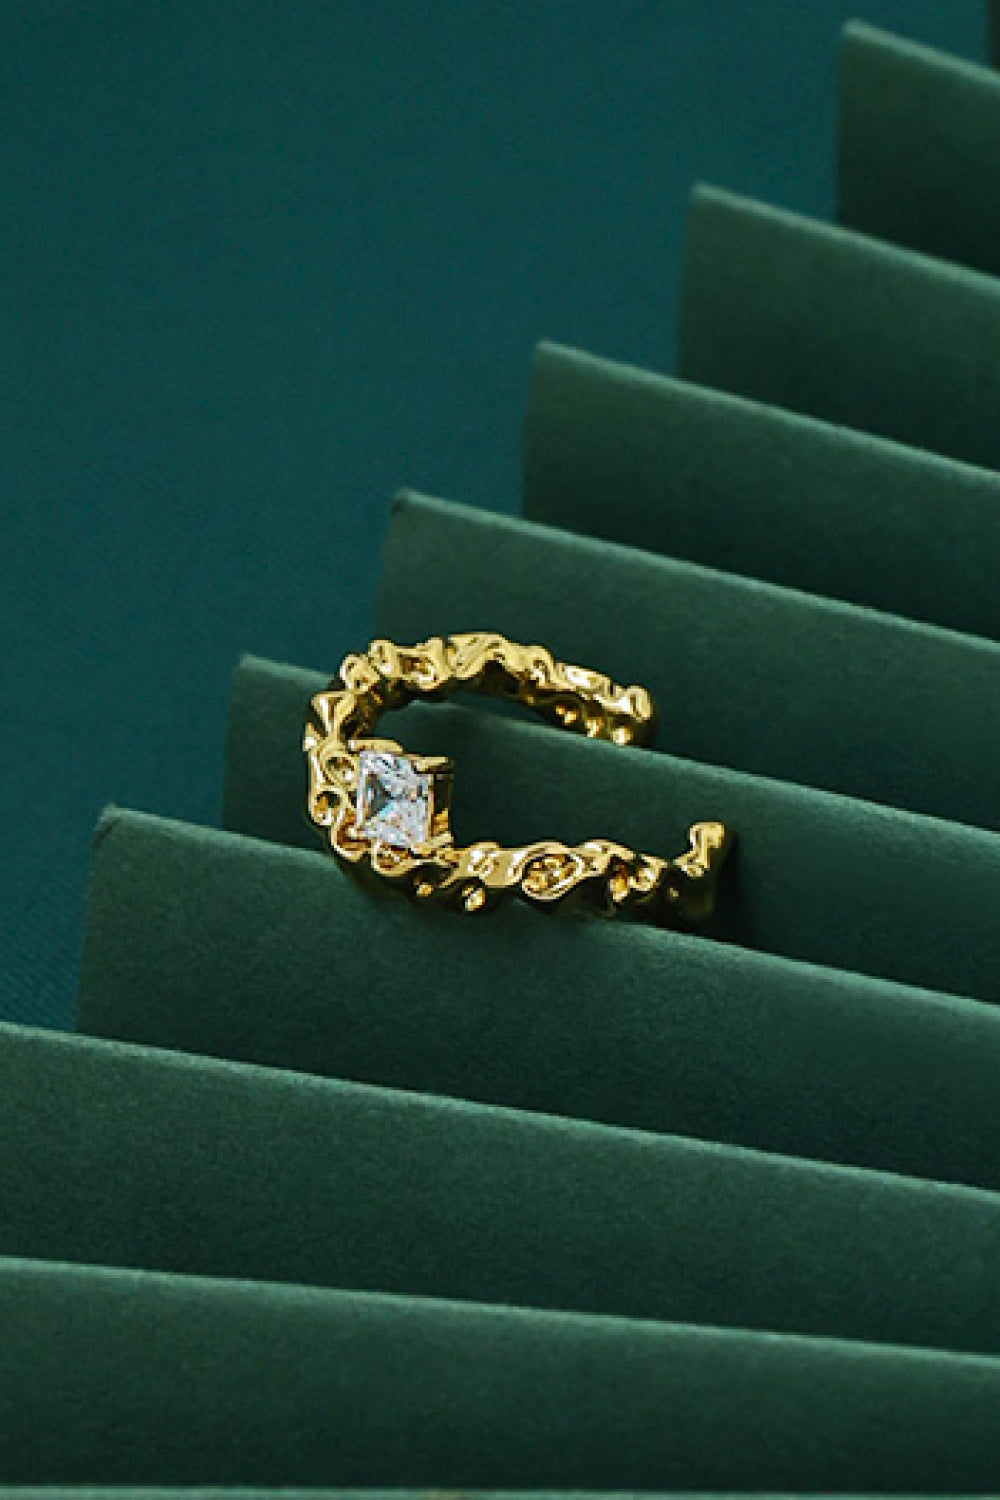 Inlaid Rhinestone Ring in Gold